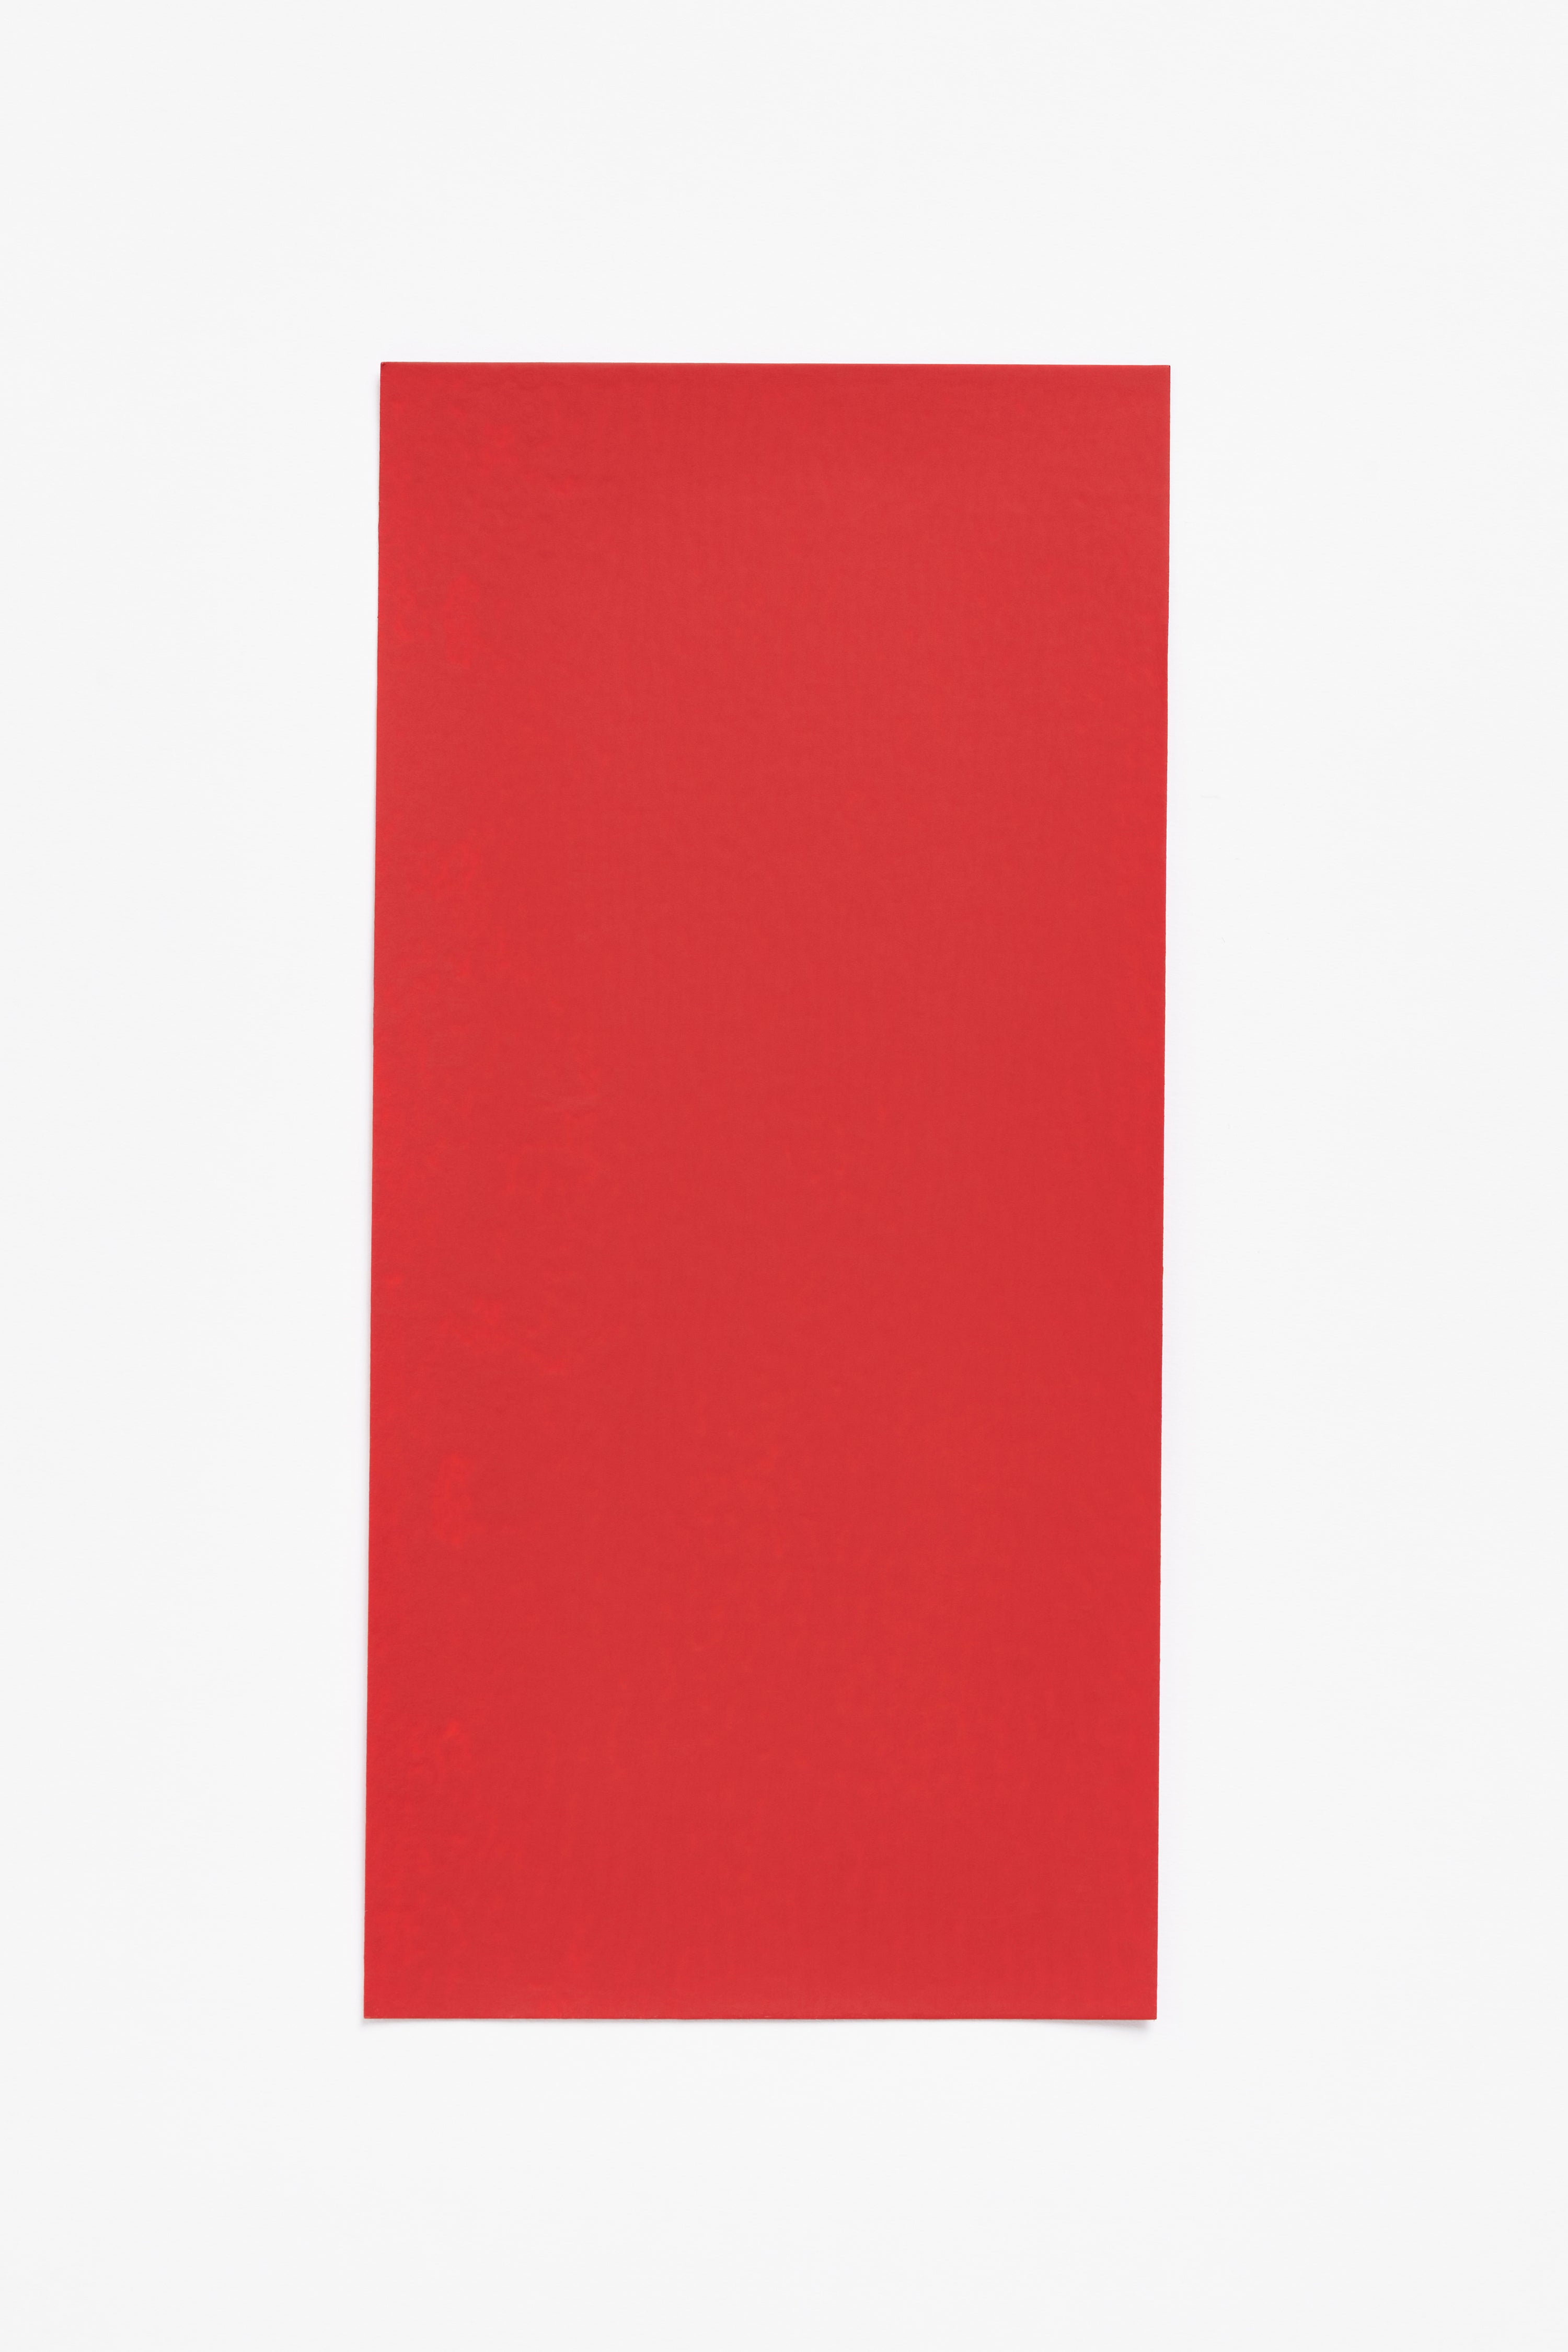 Divya Red — a paint colour developed by Cecilie Bahnsen for Blēo